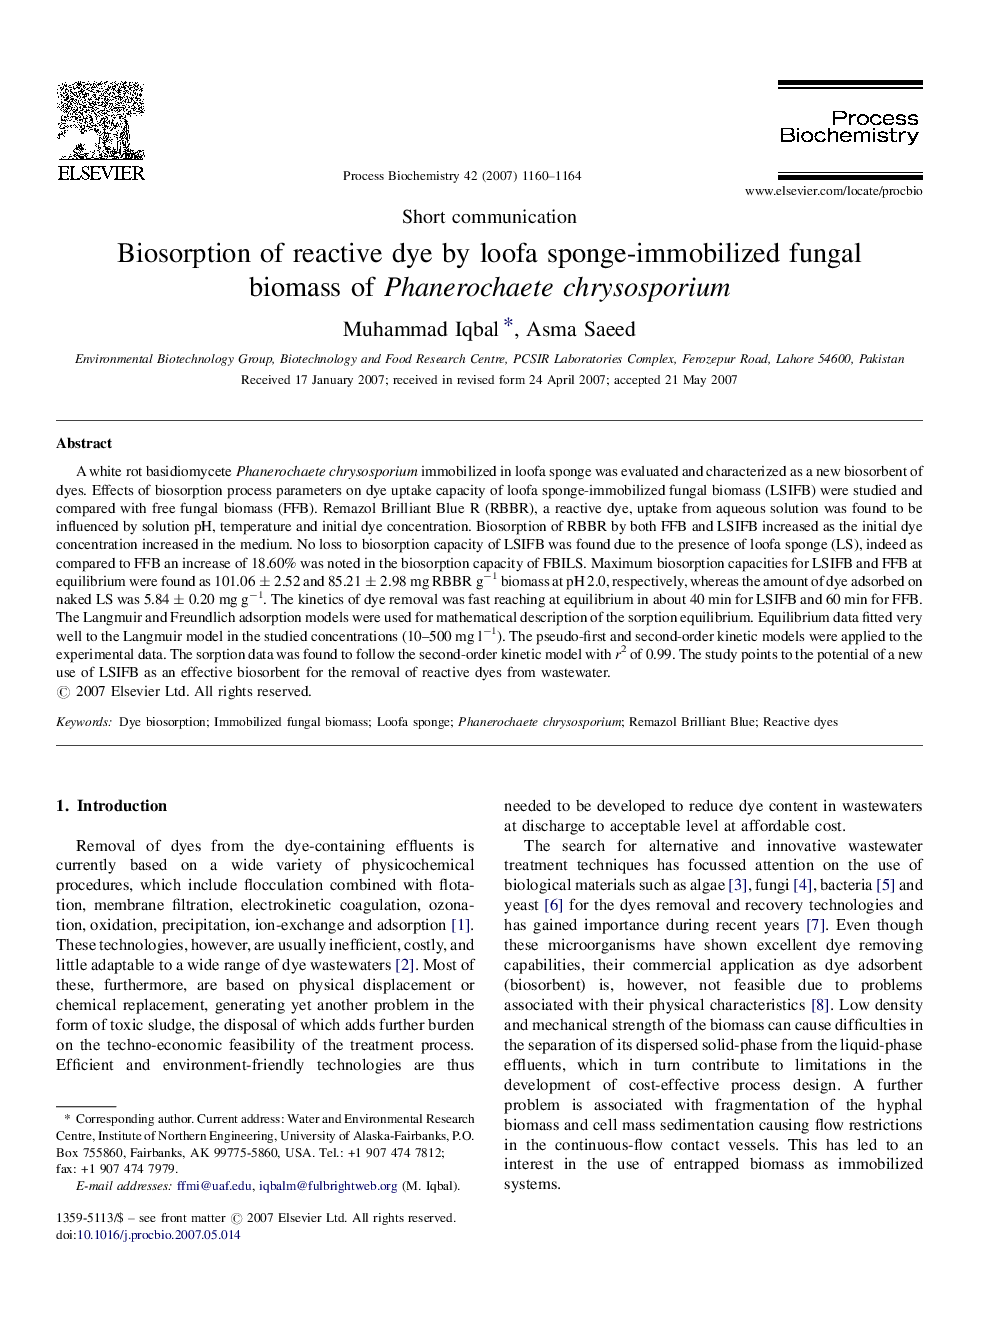 Biosorption of reactive dye by loofa sponge-immobilized fungal biomass of Phanerochaete chrysosporium